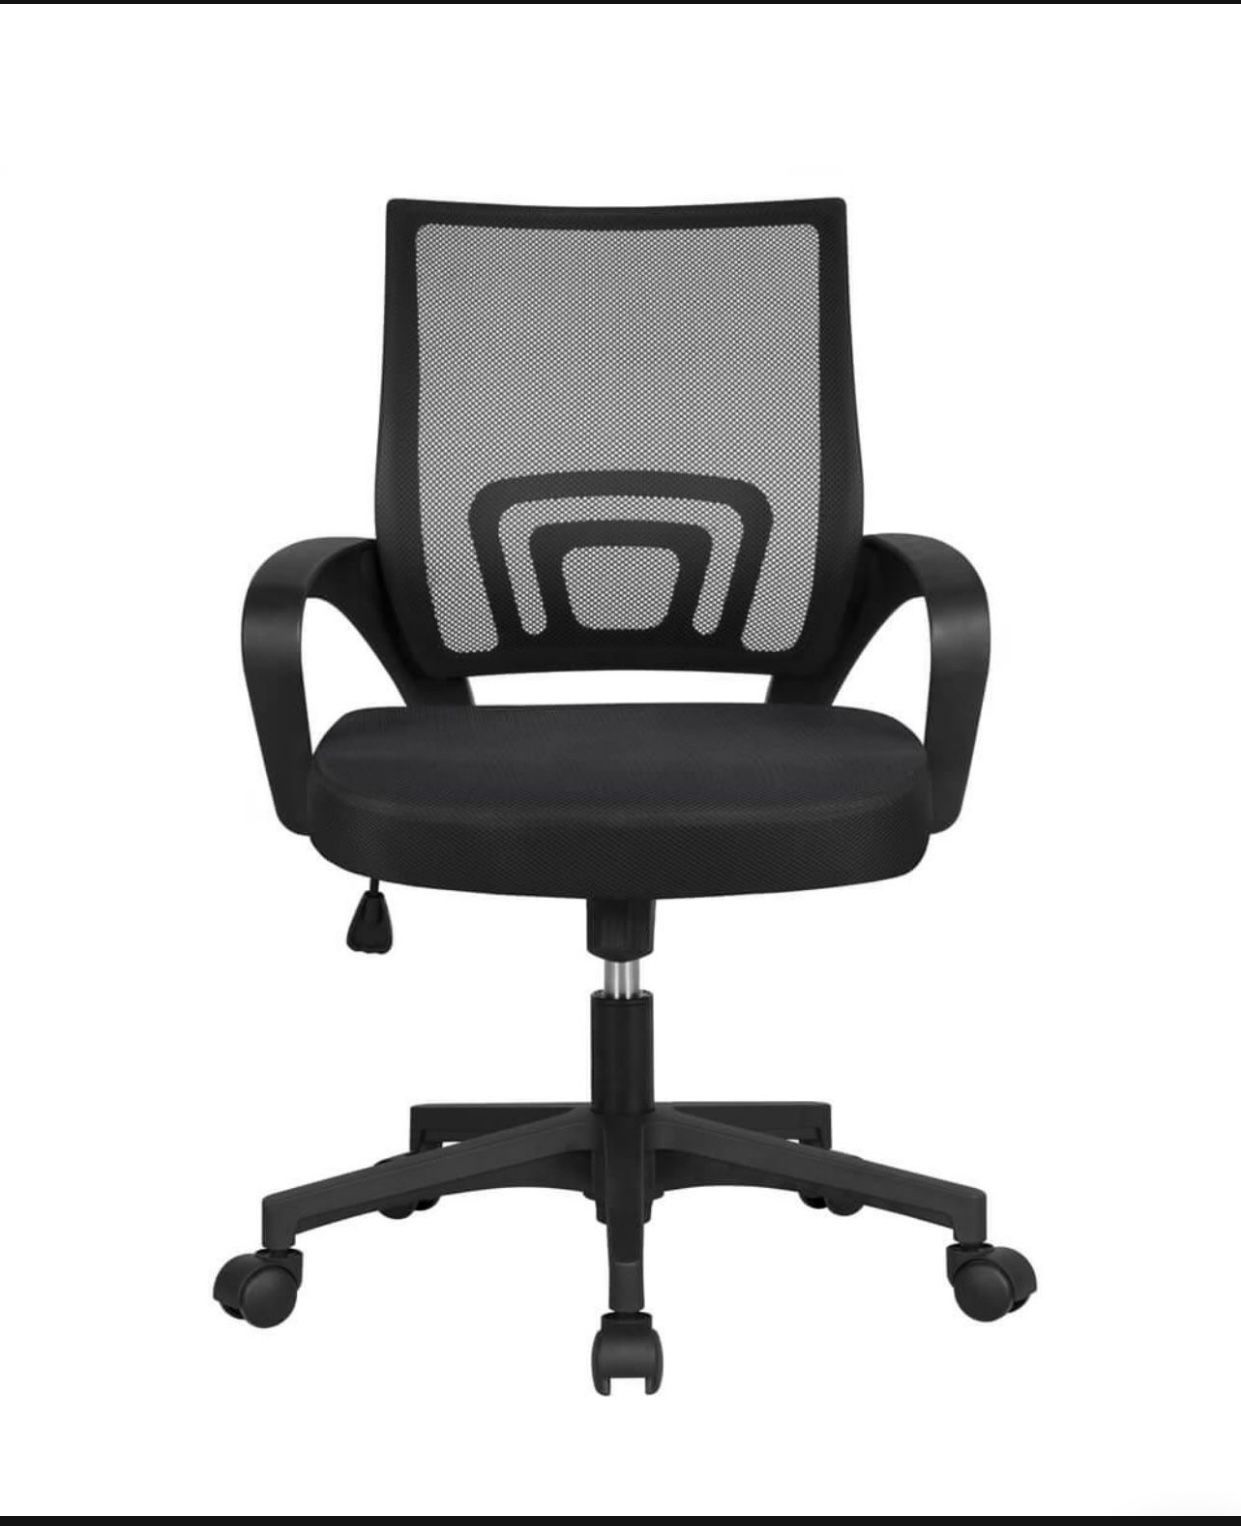 Office Chair Ergonomic Rolling Swivel Chair